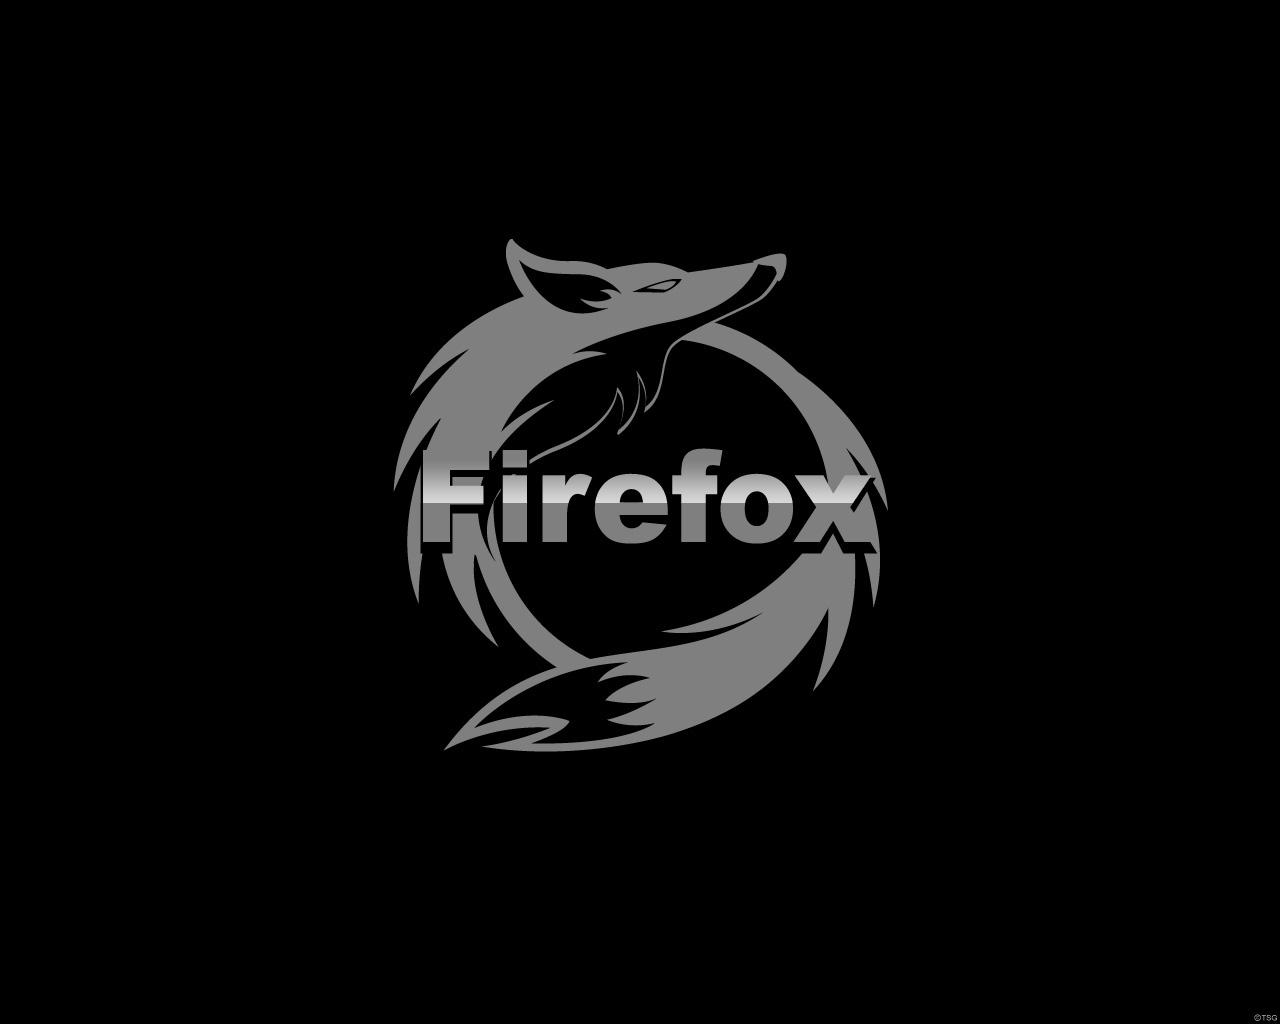 Firefox Wallpaper Stock Photos